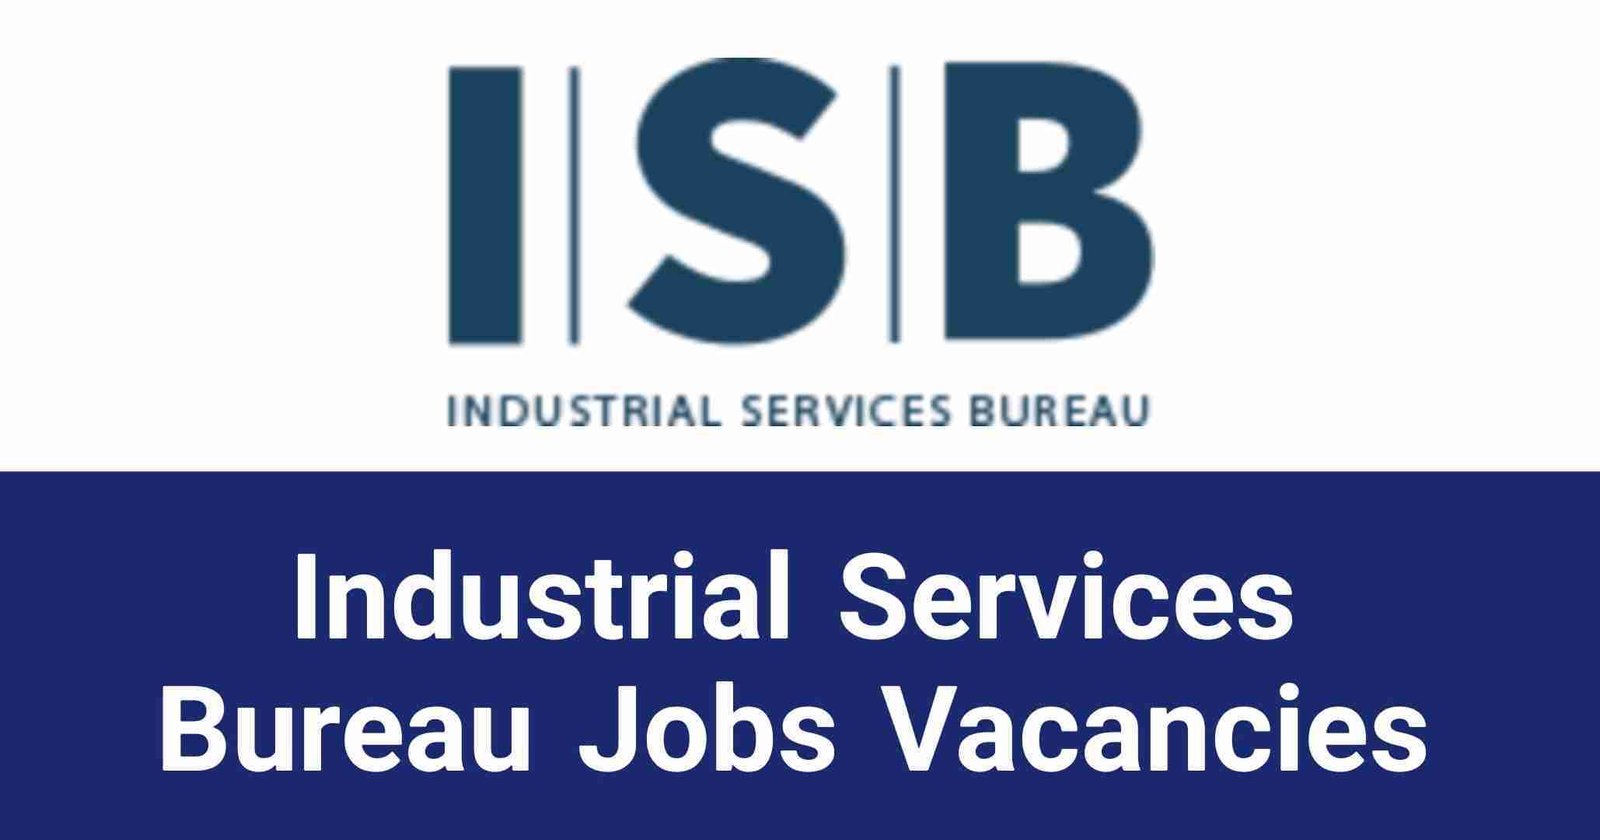 Industrial Services Bureau Jobs Vacancies